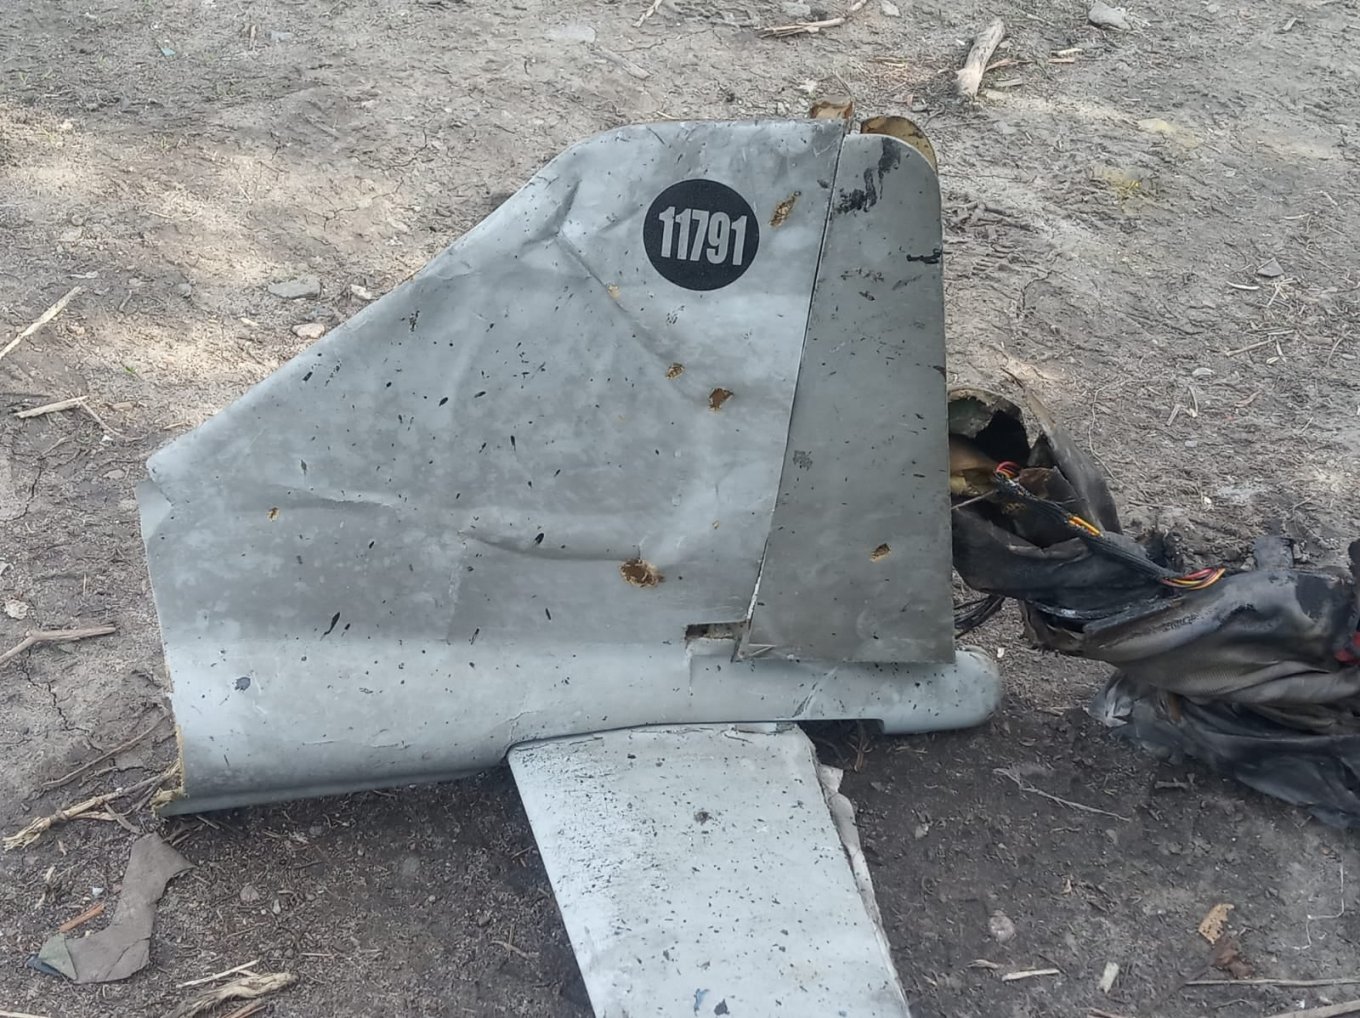 Ukrains Air Assault Forces shot down russia’s Orlan-10 UAV in Donetsk region, Defense Express